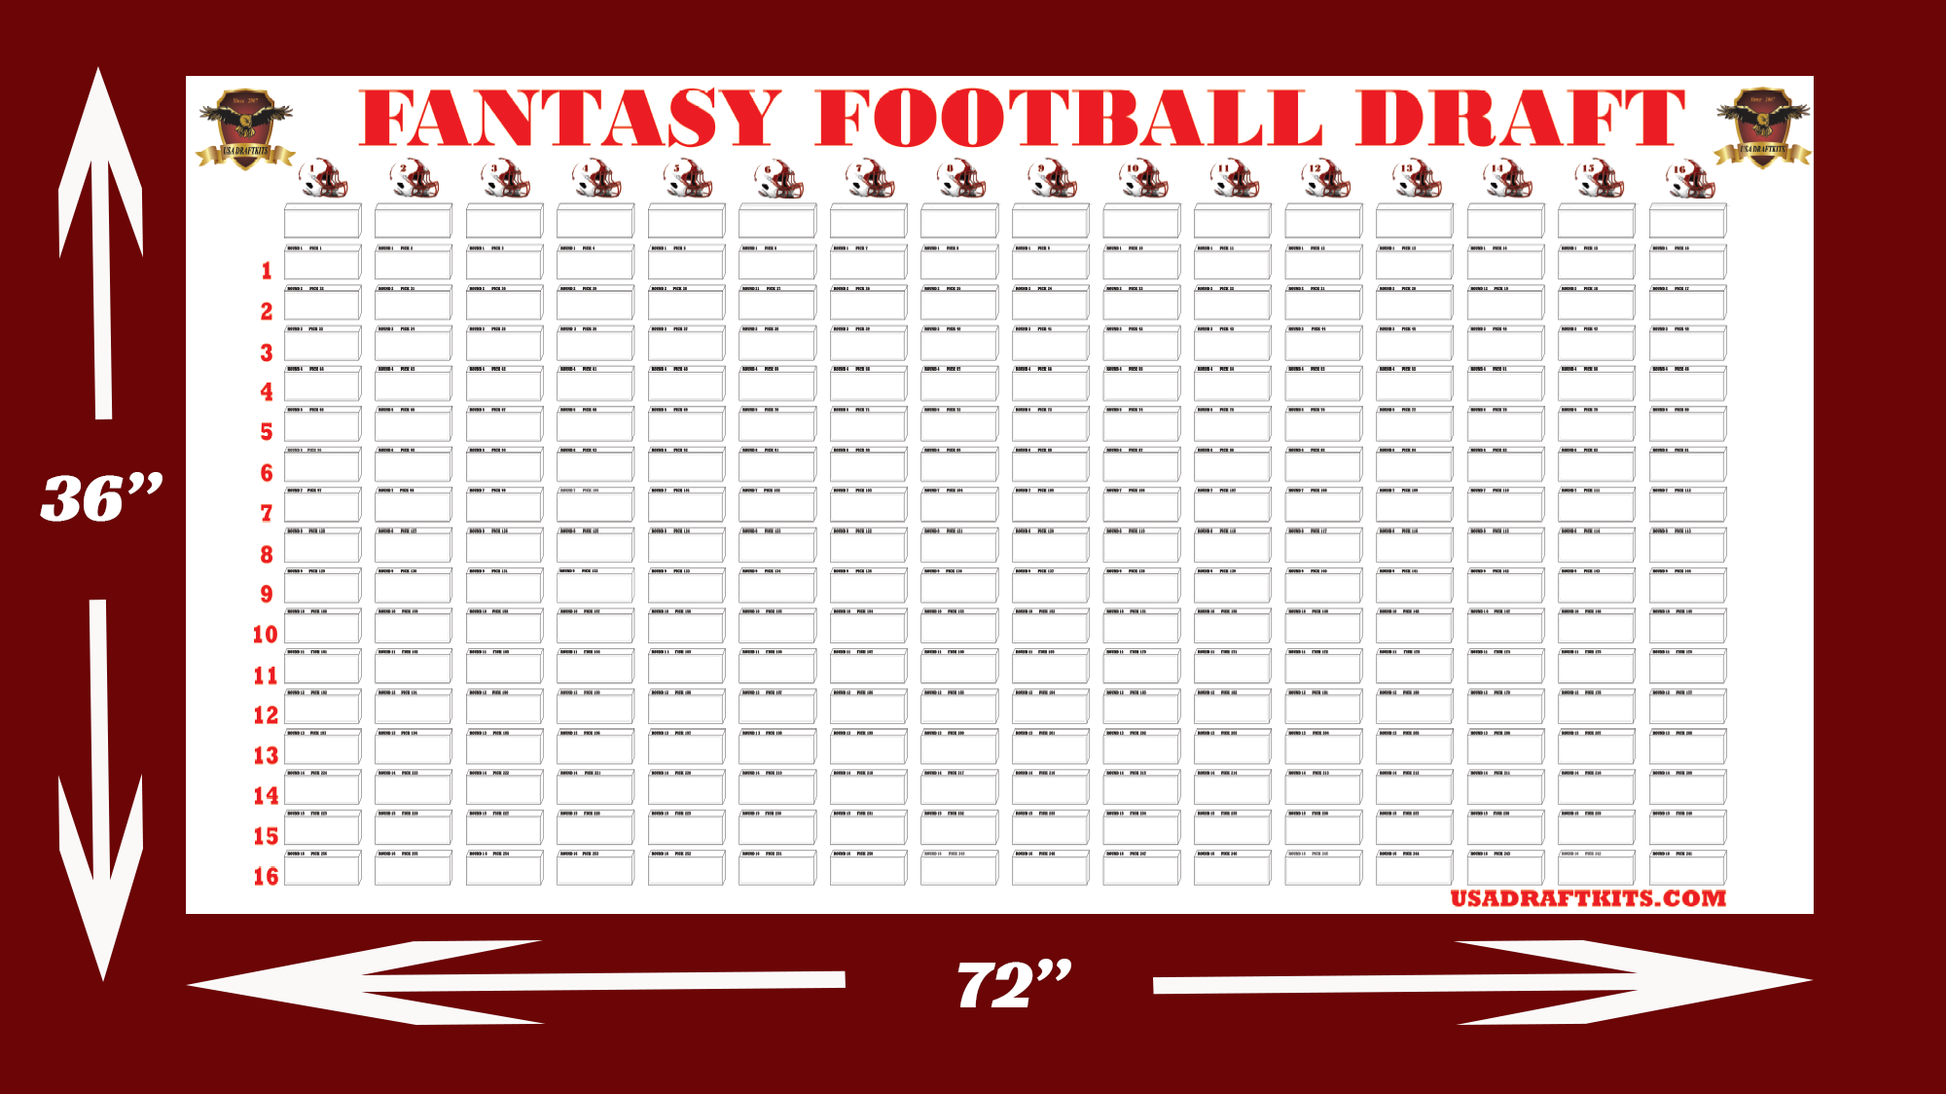 fantasy football draft board in store